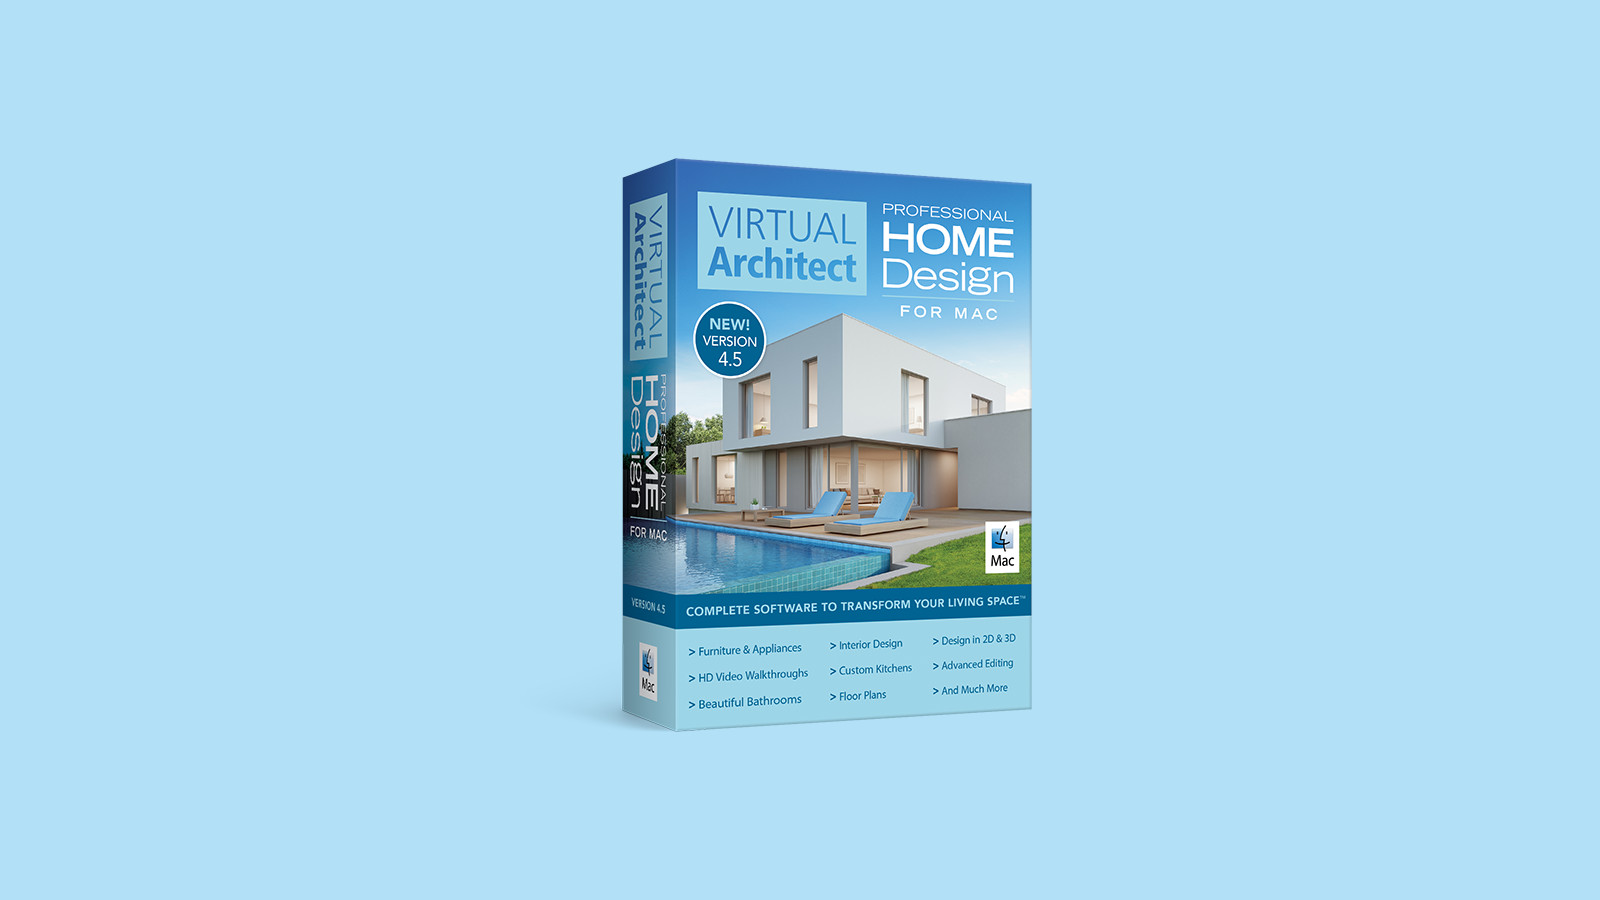 [$ 64.8] Virtual Architect Professional Home Design for Mac CD Key